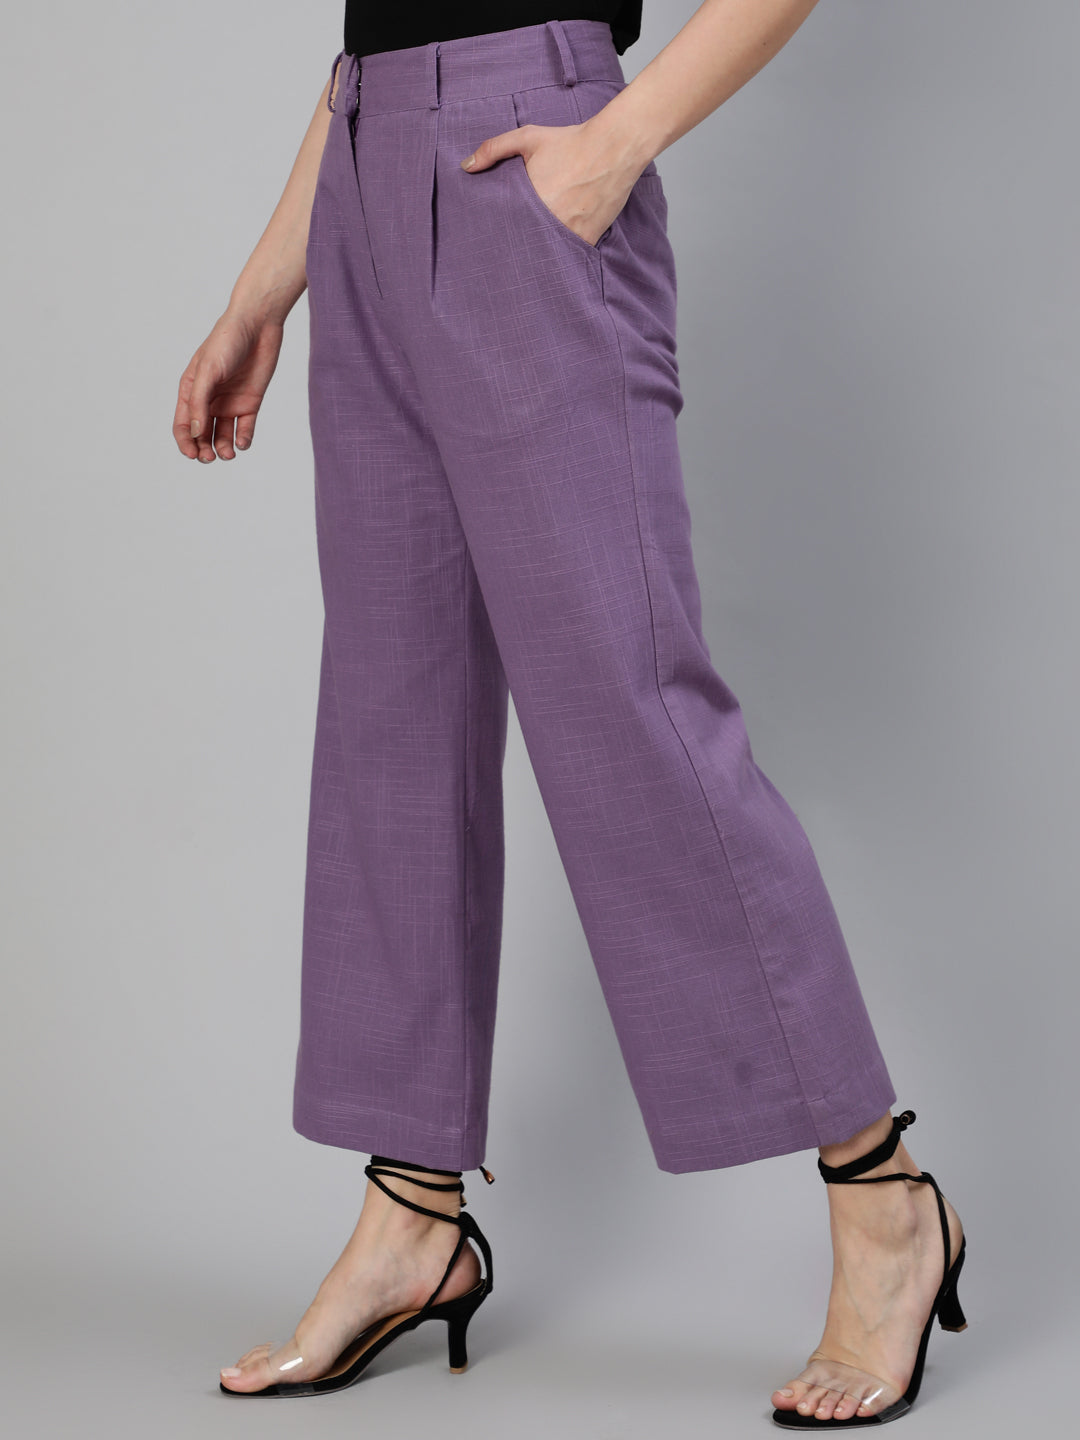 Buy parallel pants with crop top